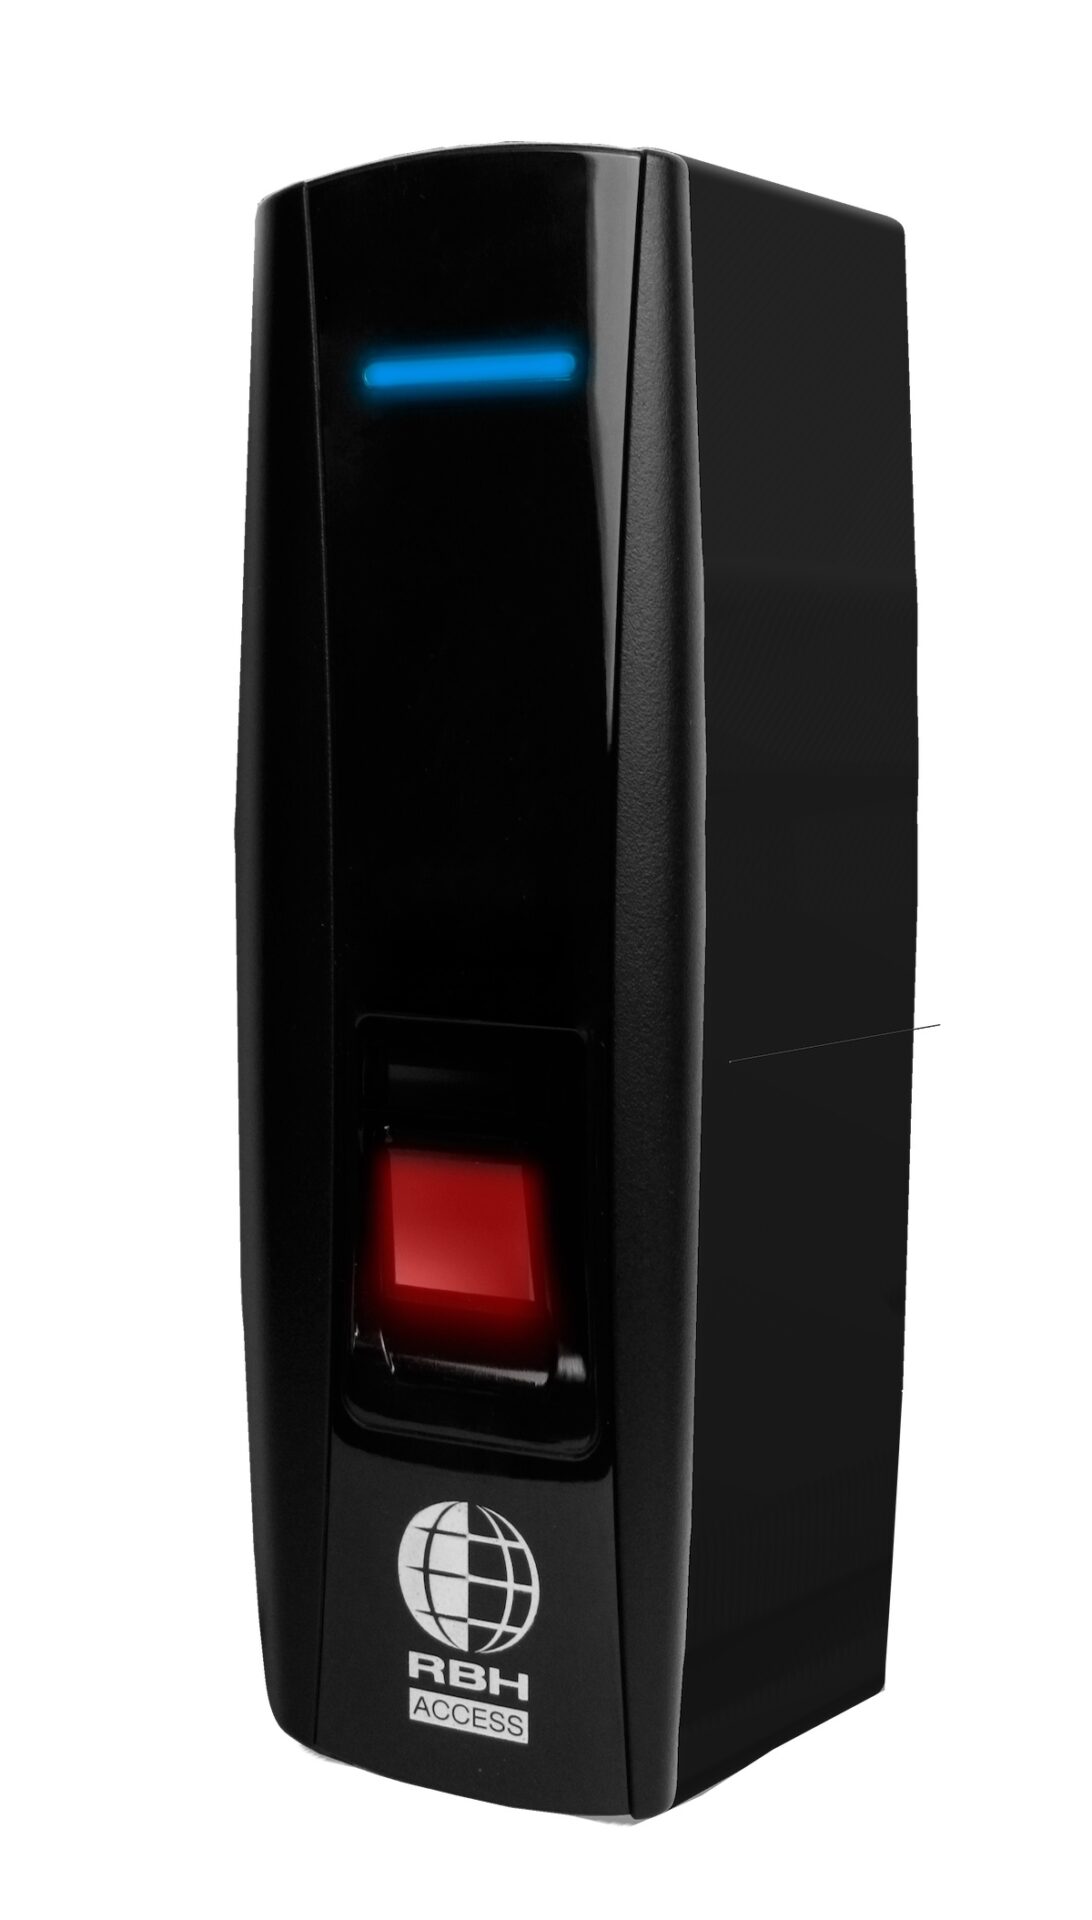 BFR-150 Access Control System smart card reader fingerprint reader